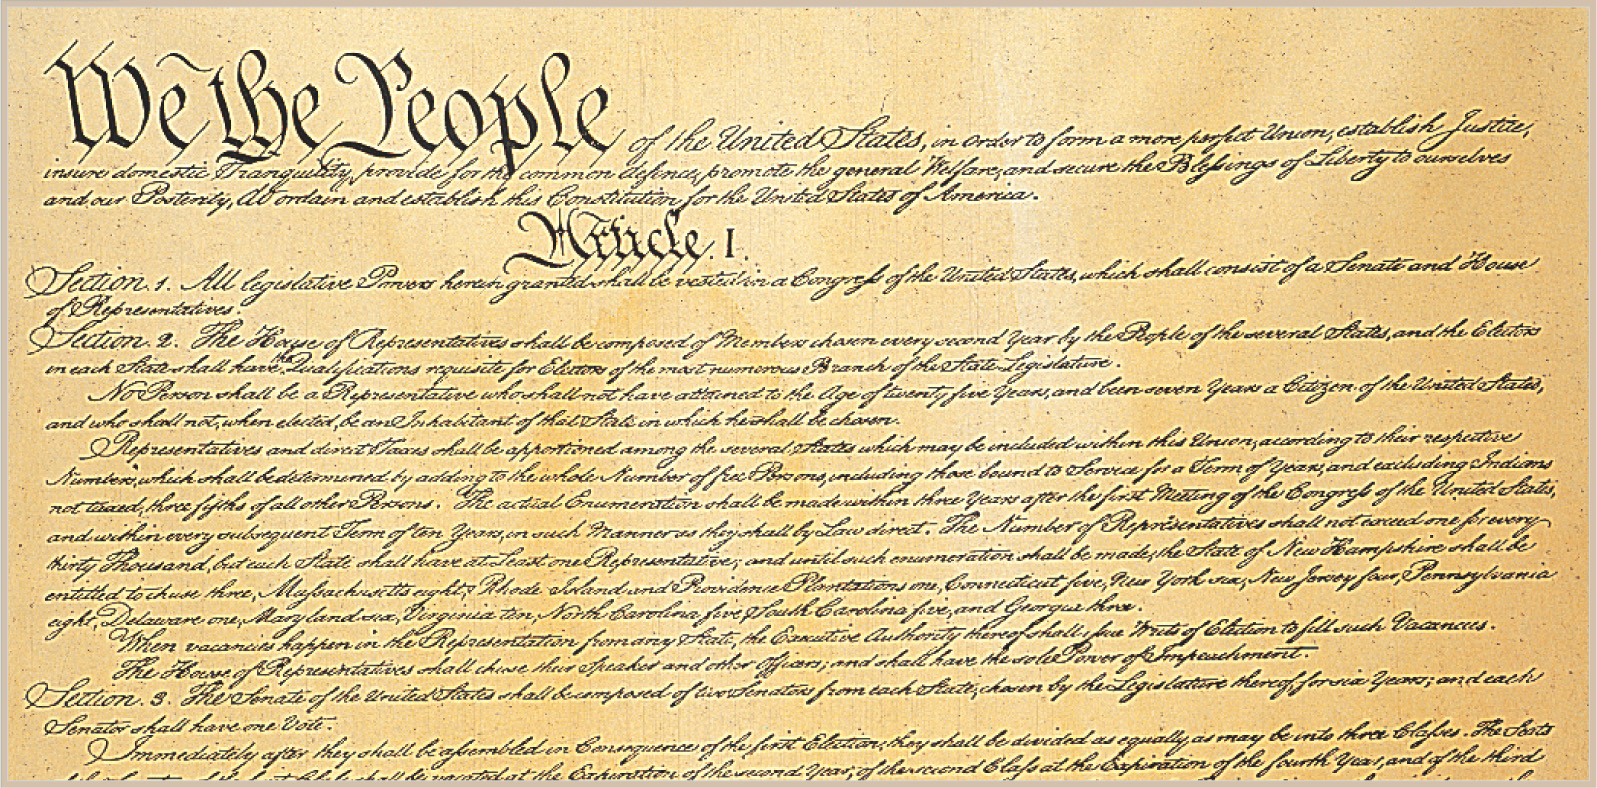 An image of the original handwritten Constitution.